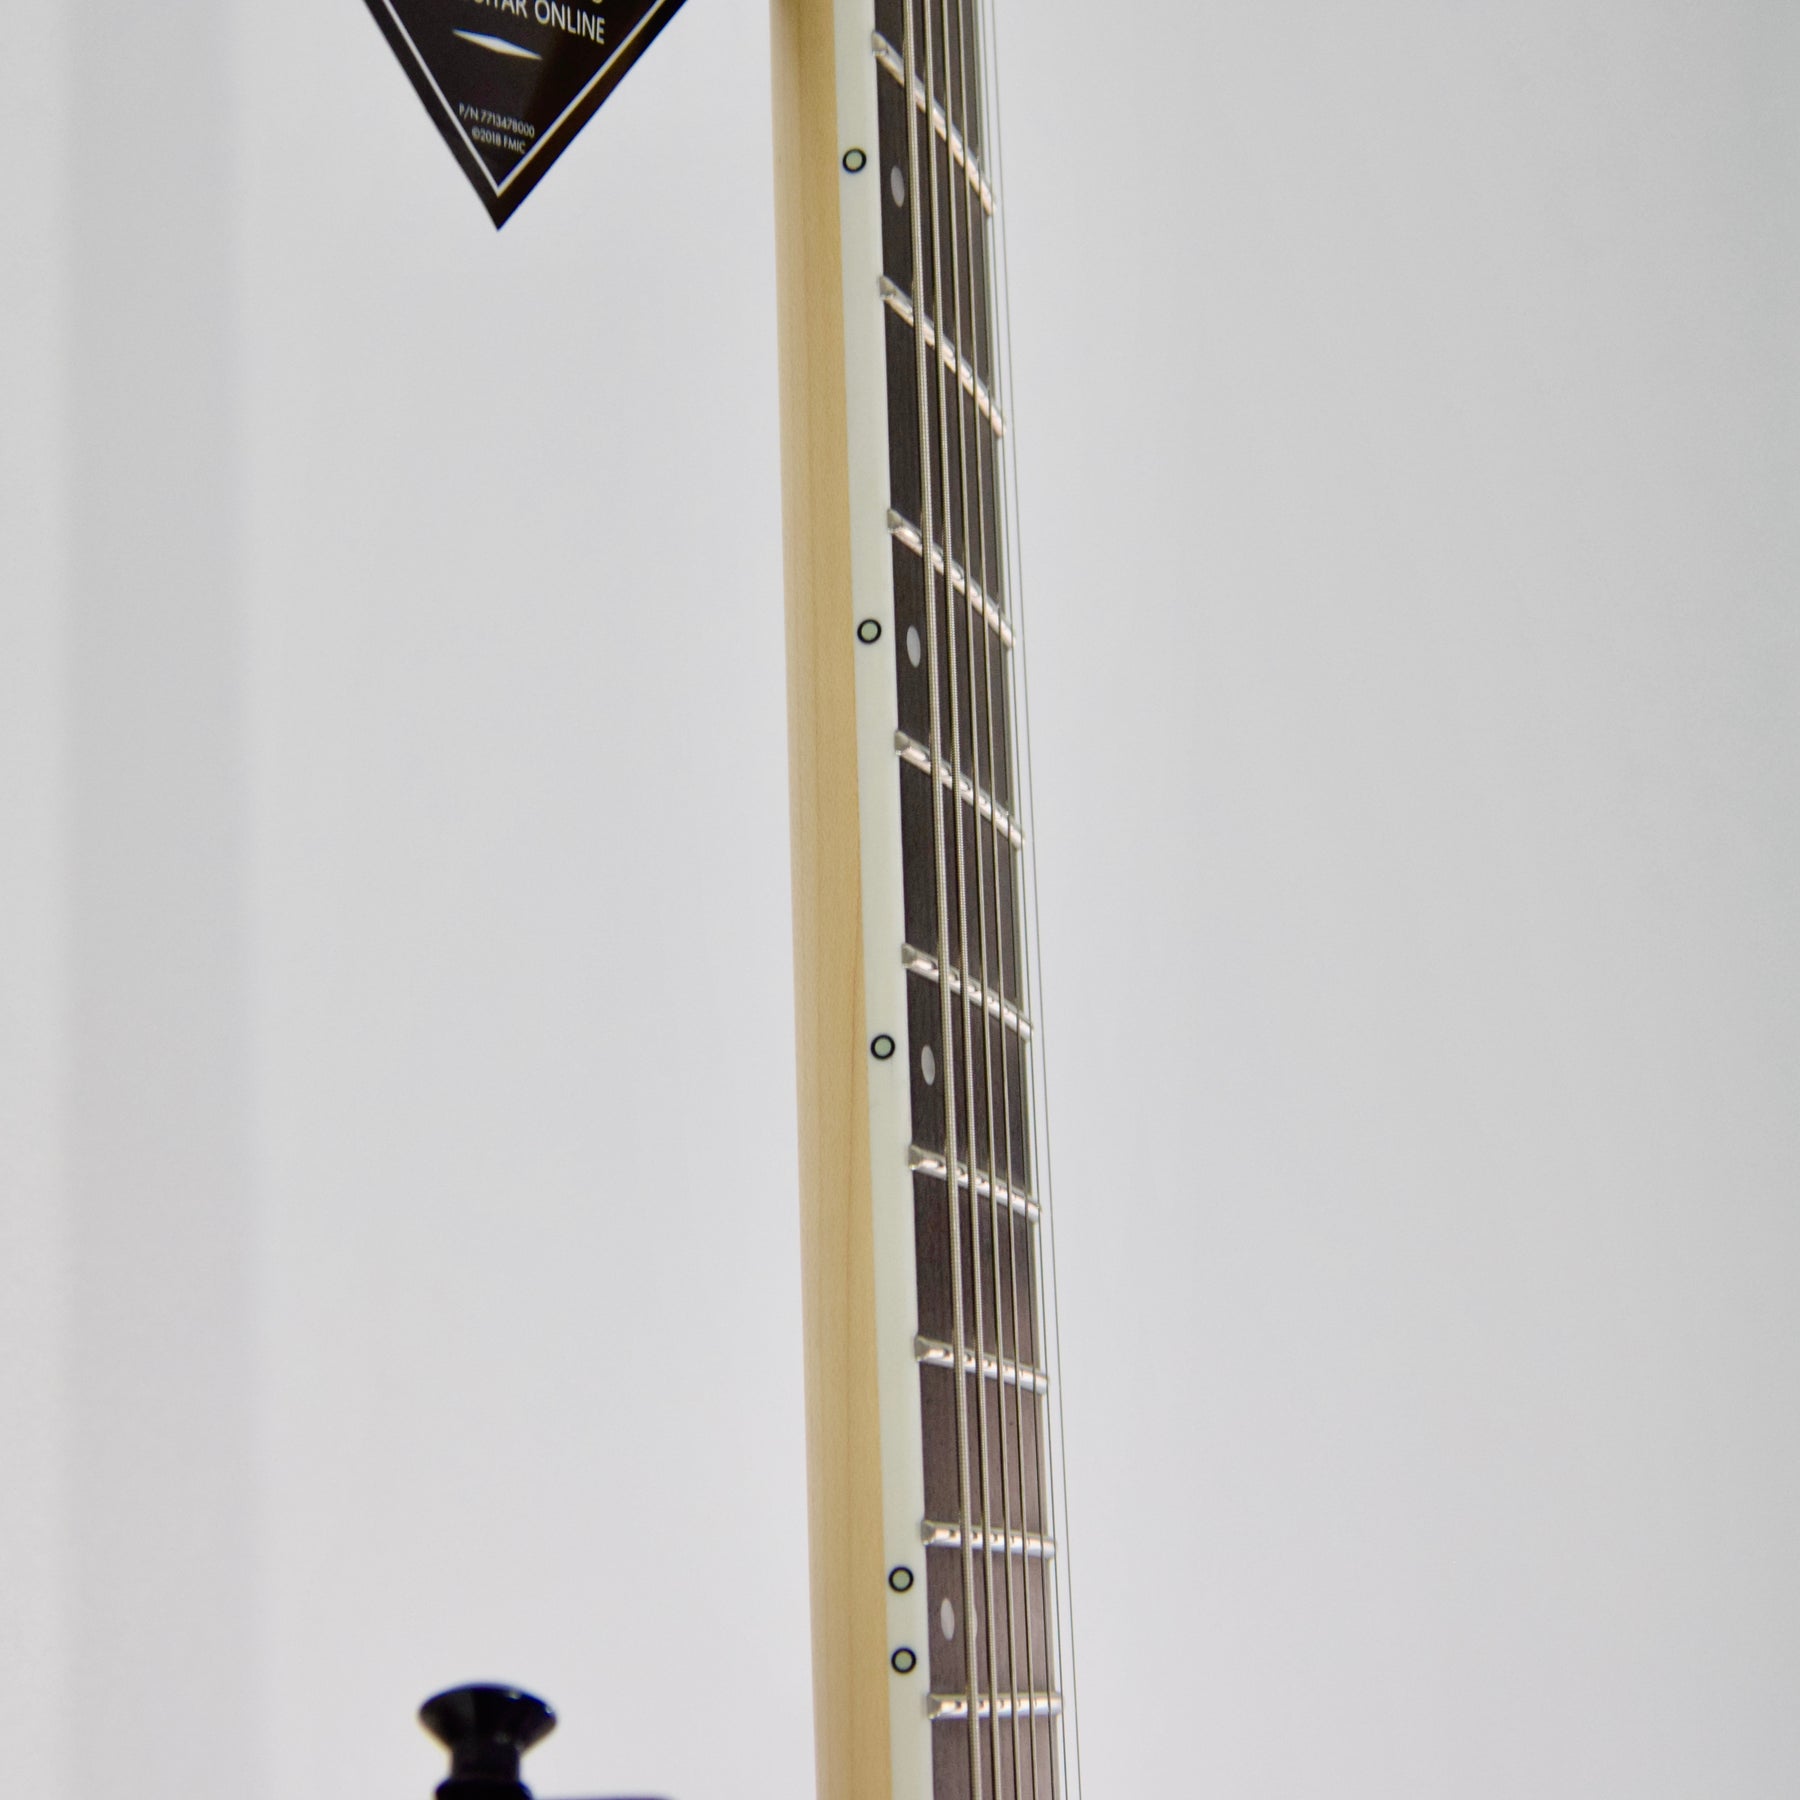 Jackson Pro Series Dinky DK Modern HT7 MS 7-String Electric Guitar